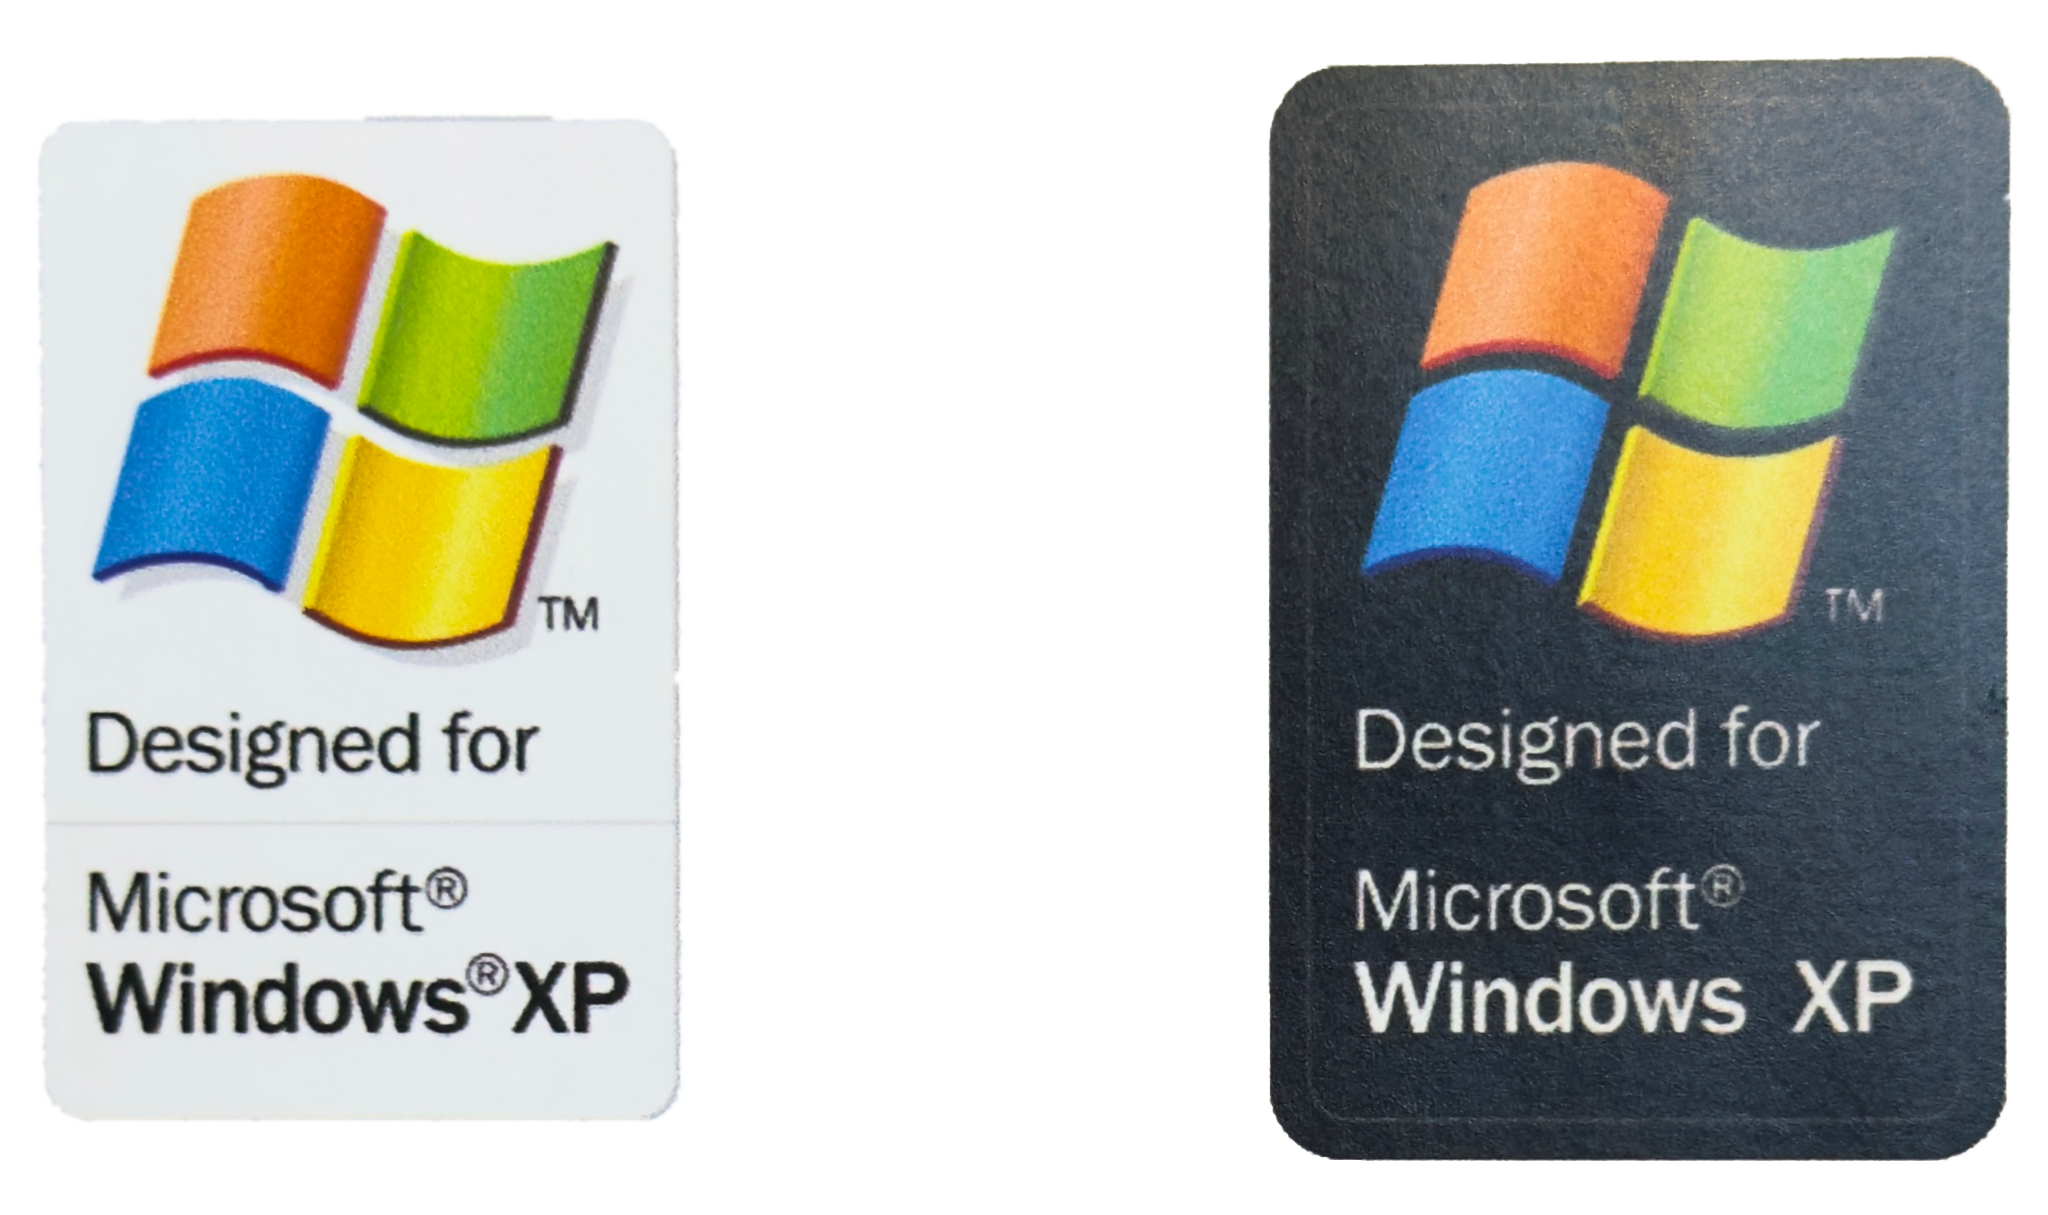 Designed for Microsoft Windows XP Sticker Set of 2 Small